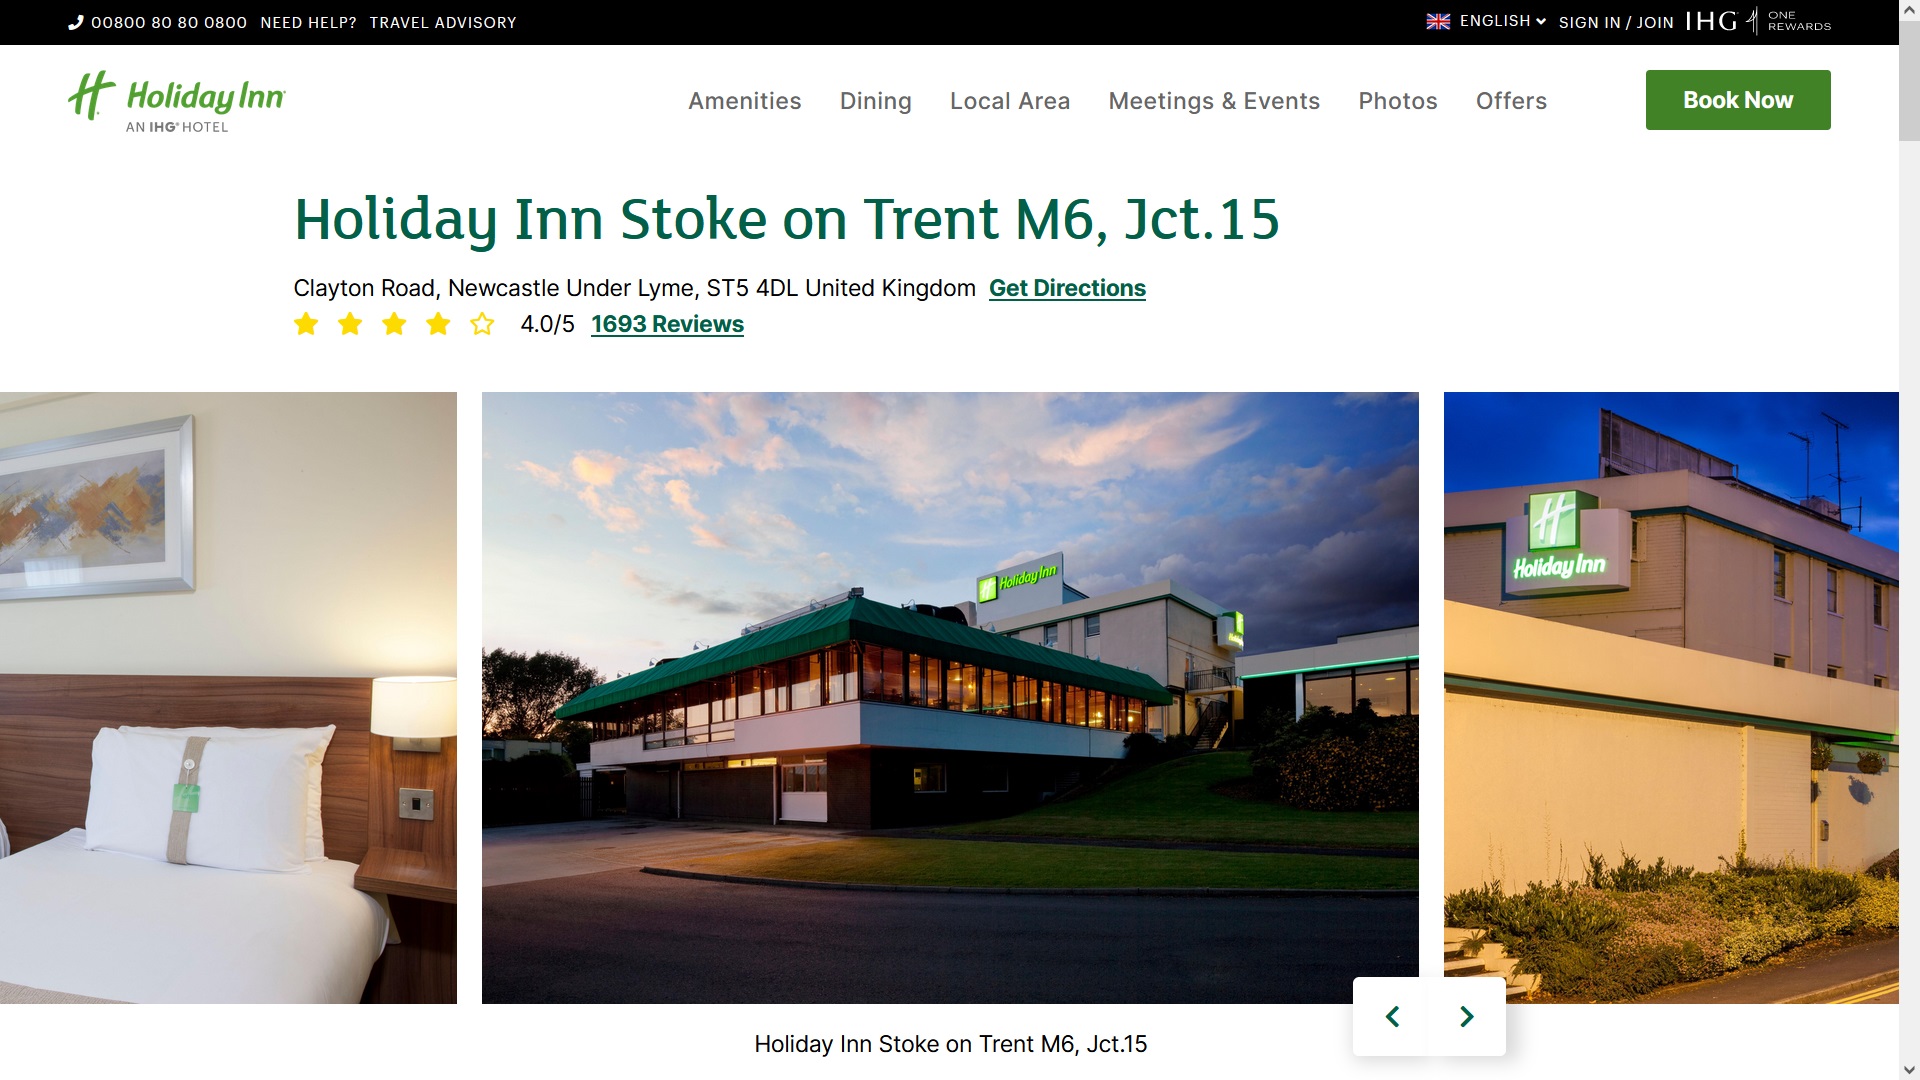 image of the Holiday Inn Stoke website